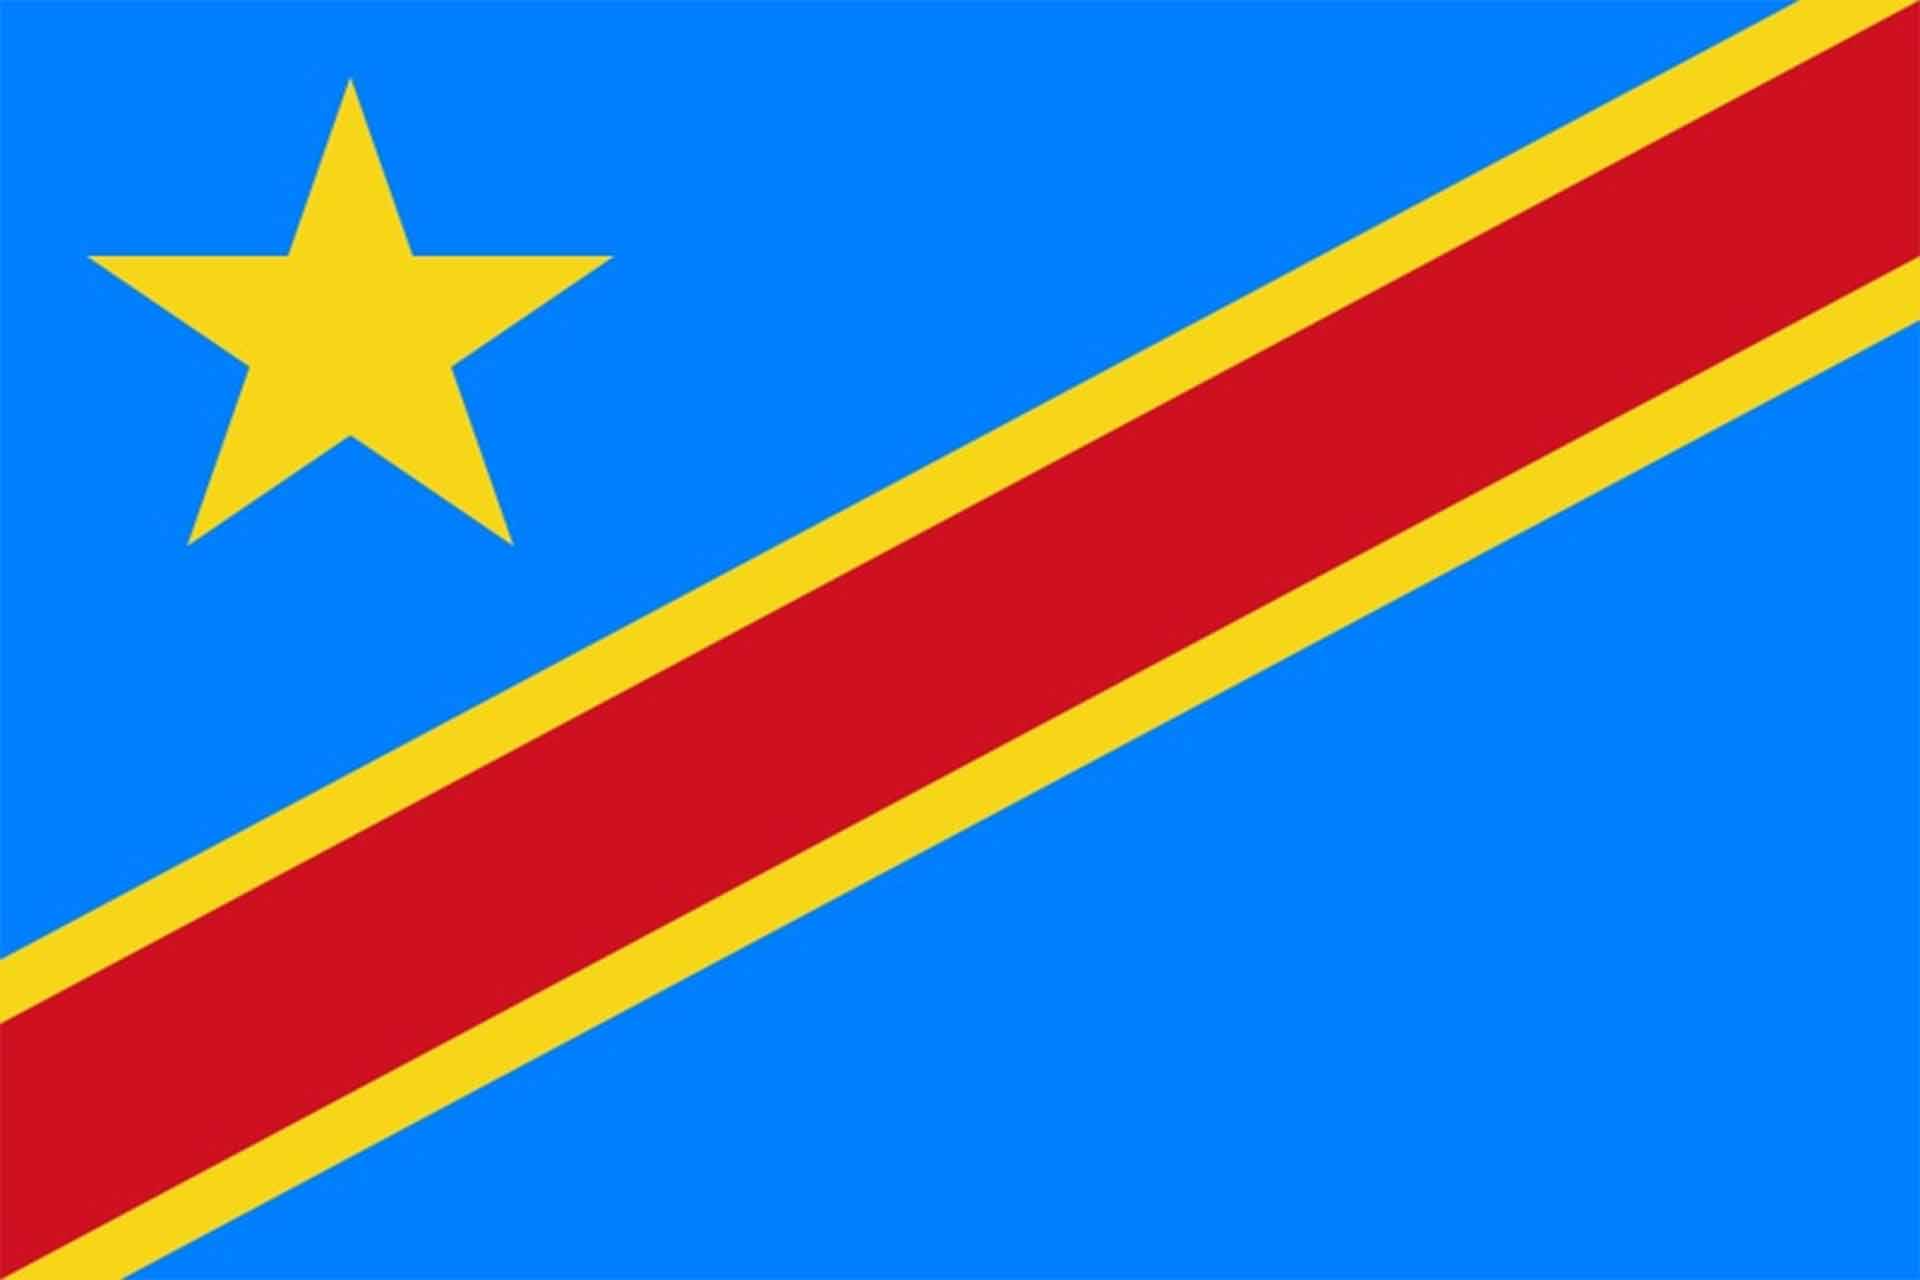 Repubulika Iharanira Demokarasi ya Kongo